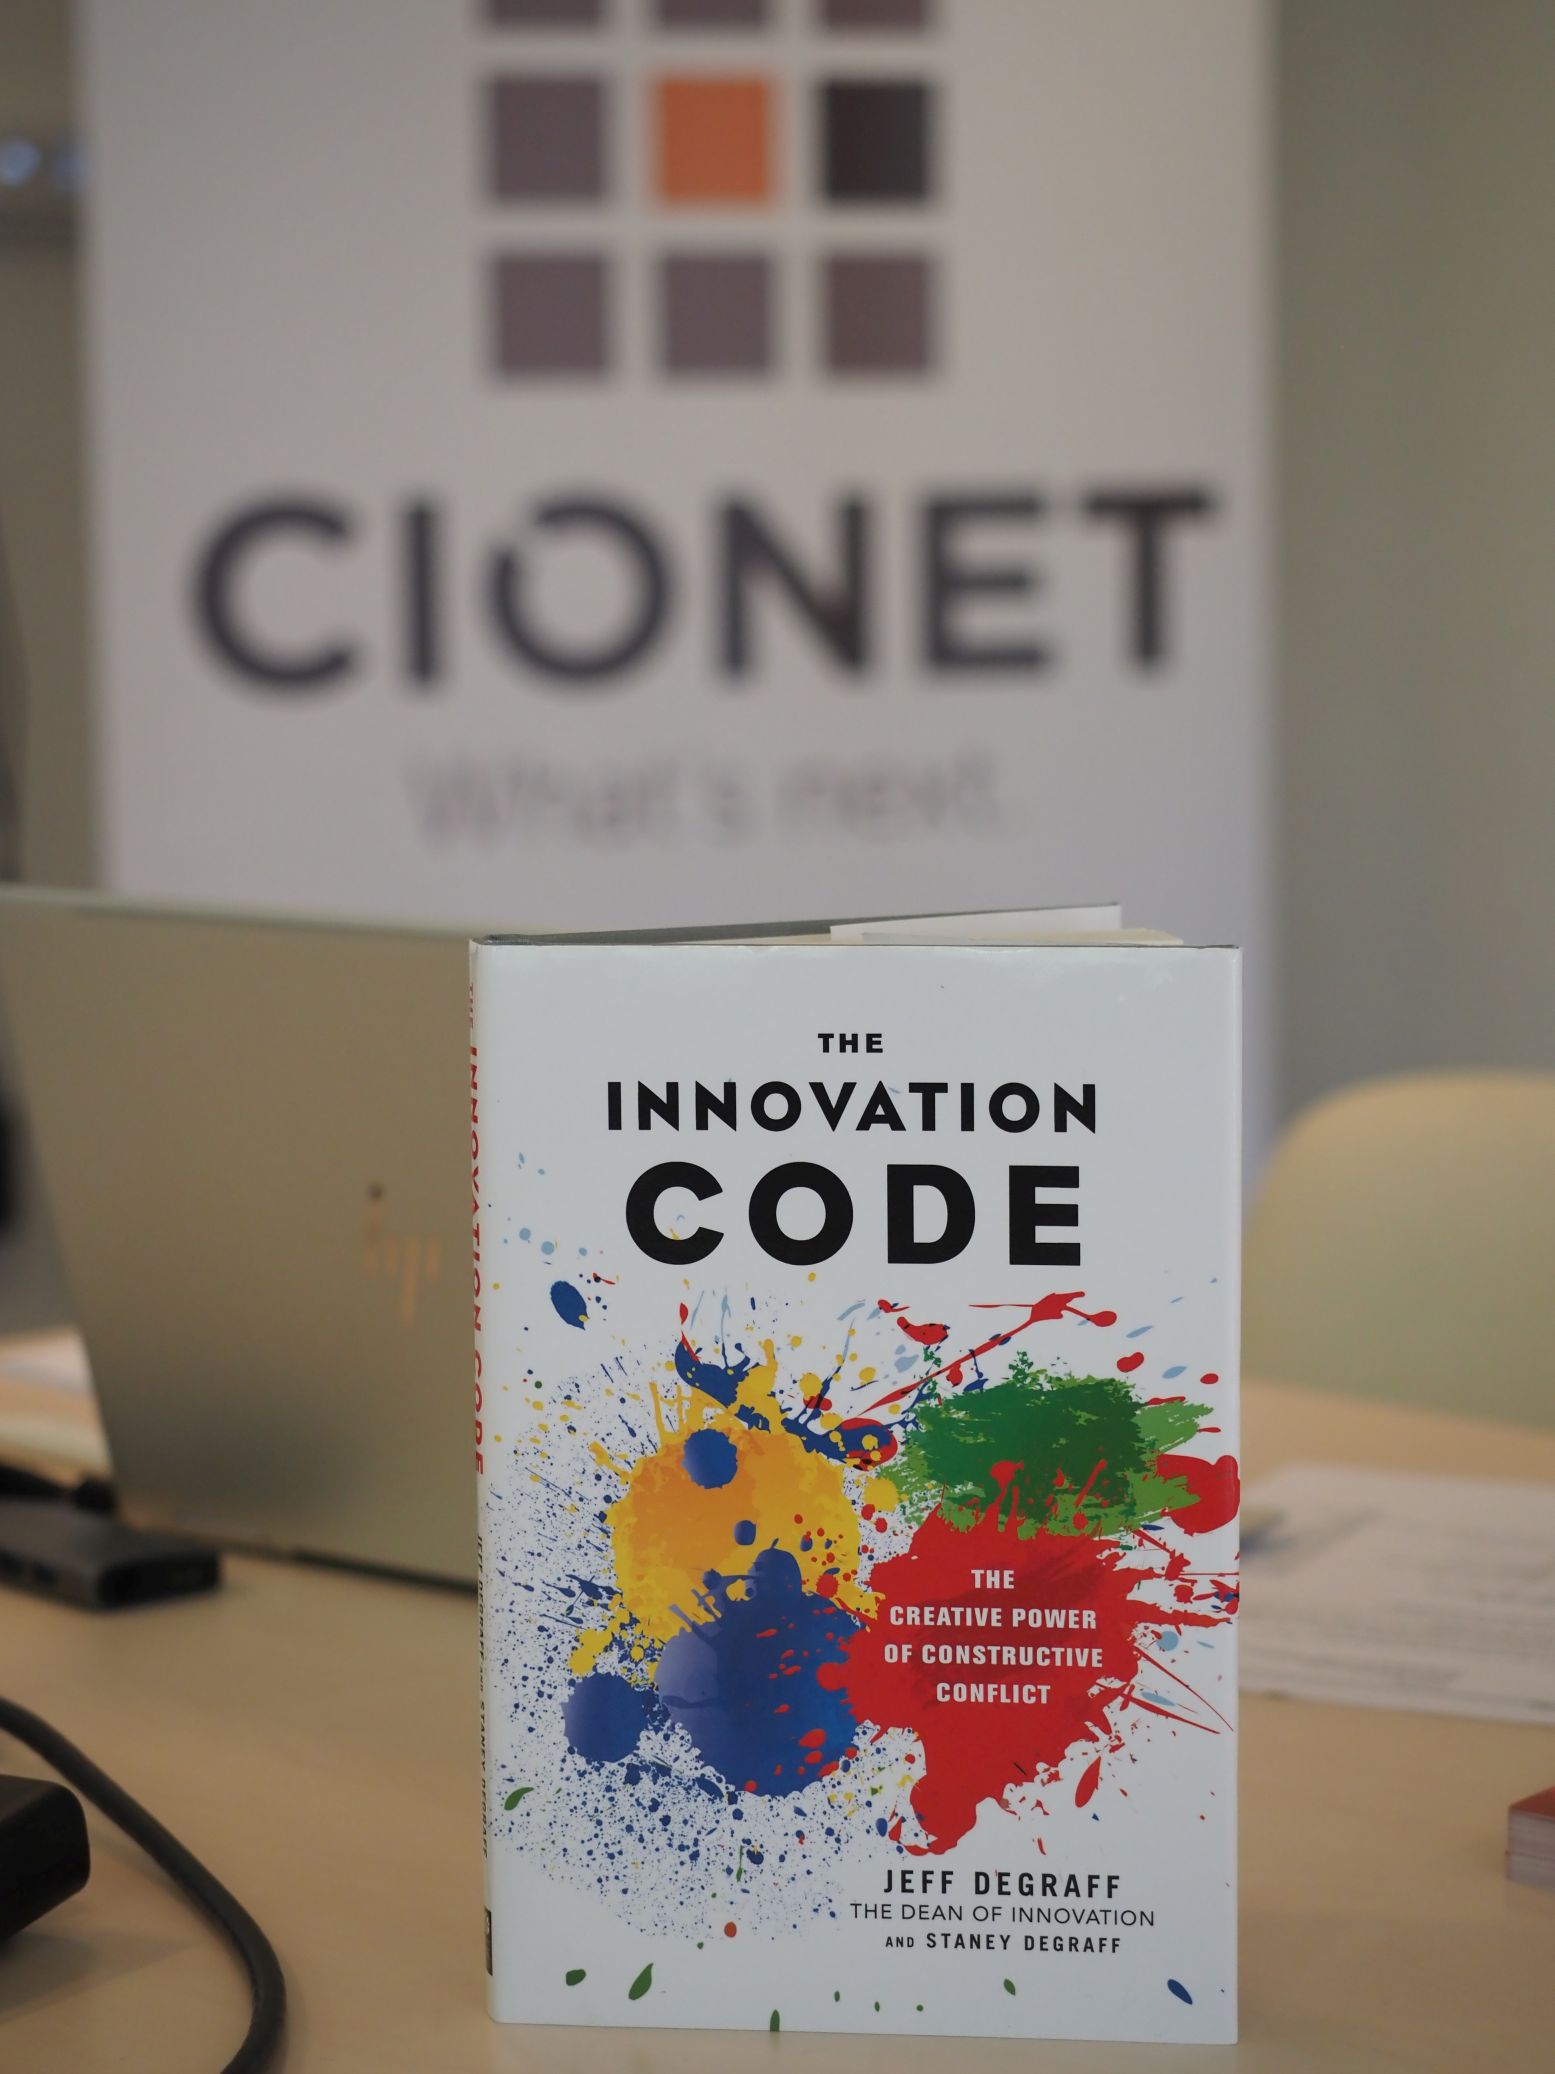 CIONET Belgium - Innovation Game Liege